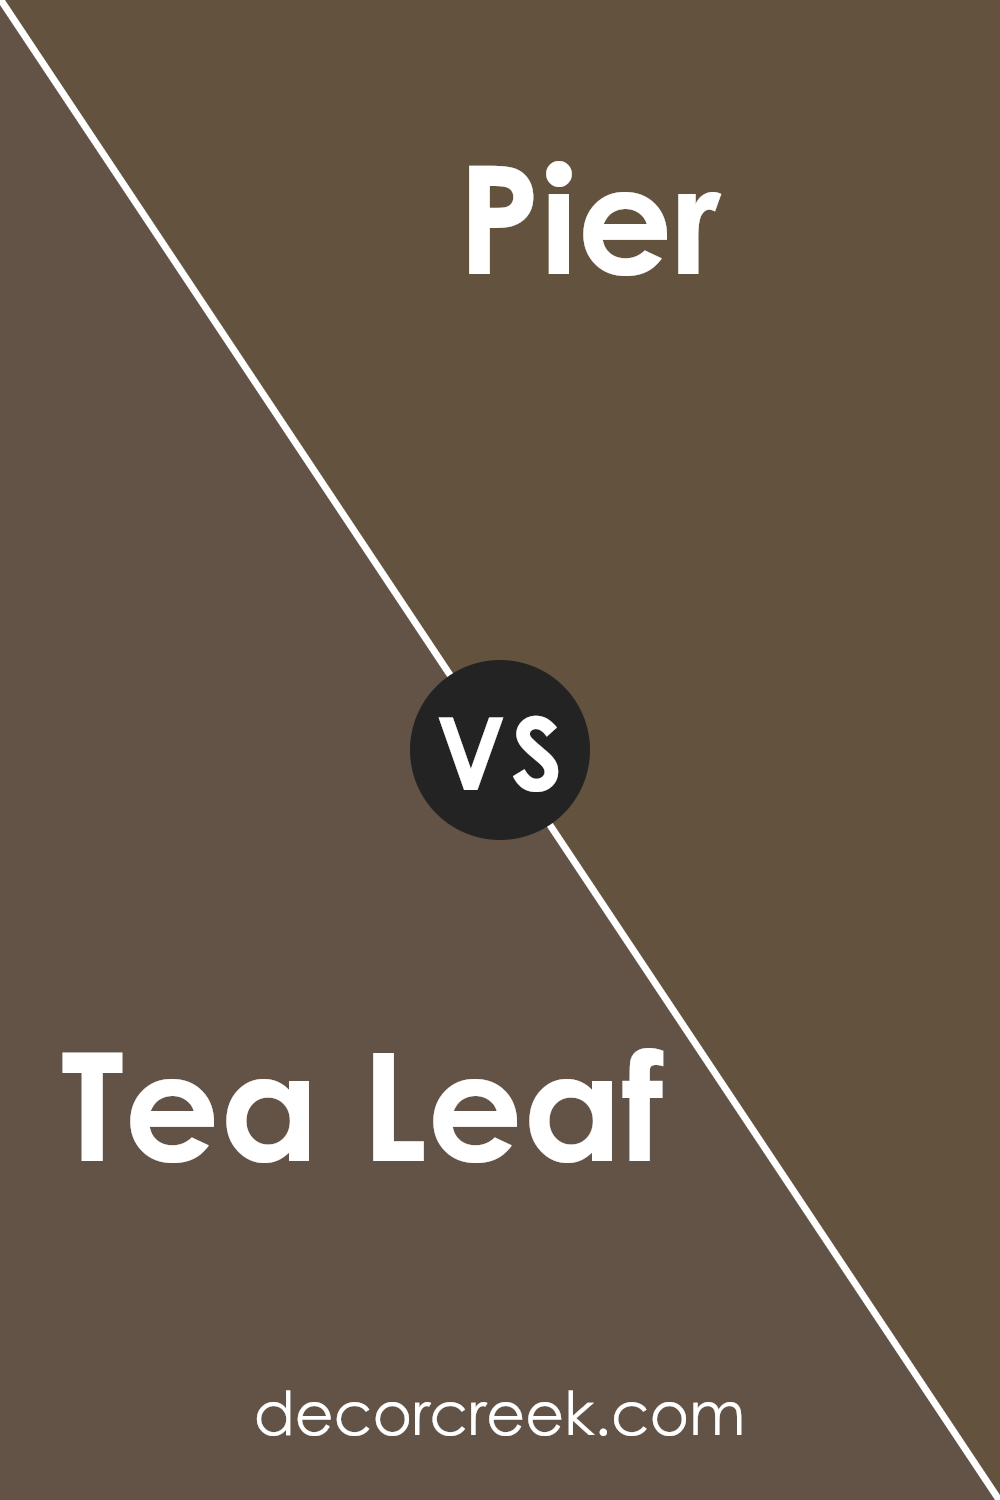 tea_leaf_sw_9604_vs_pier_sw_7545